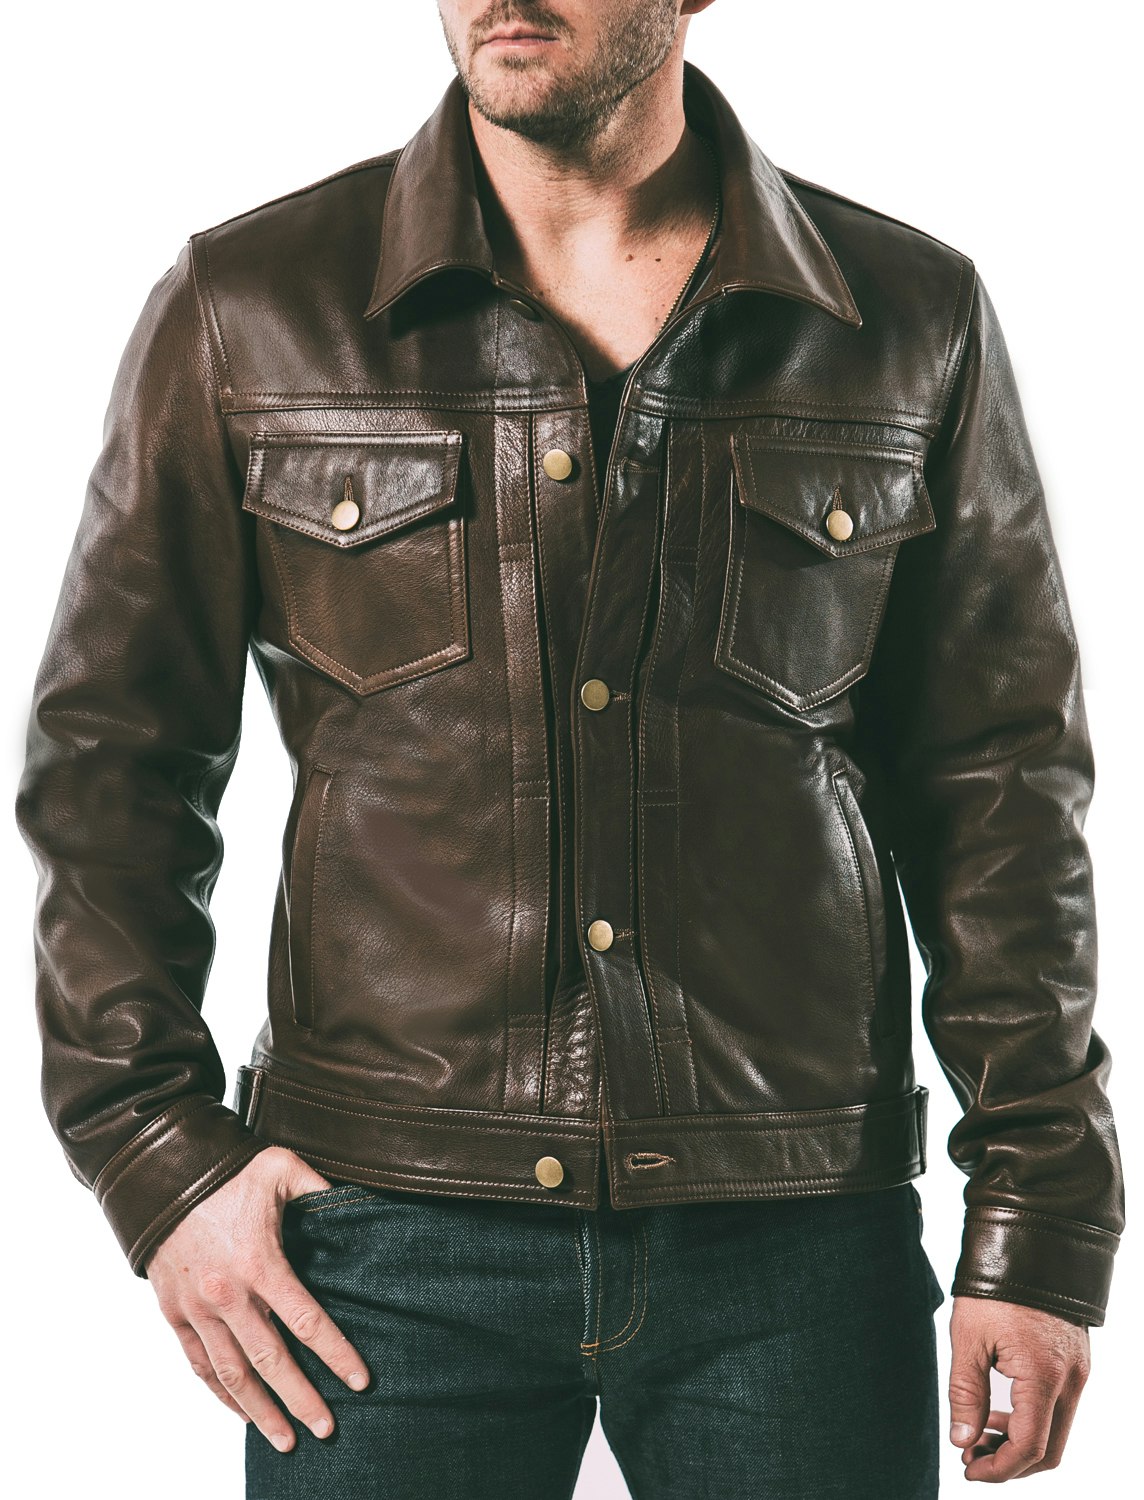 Satchel & Page Leather Jackets | Price & Reviews | Massdrop